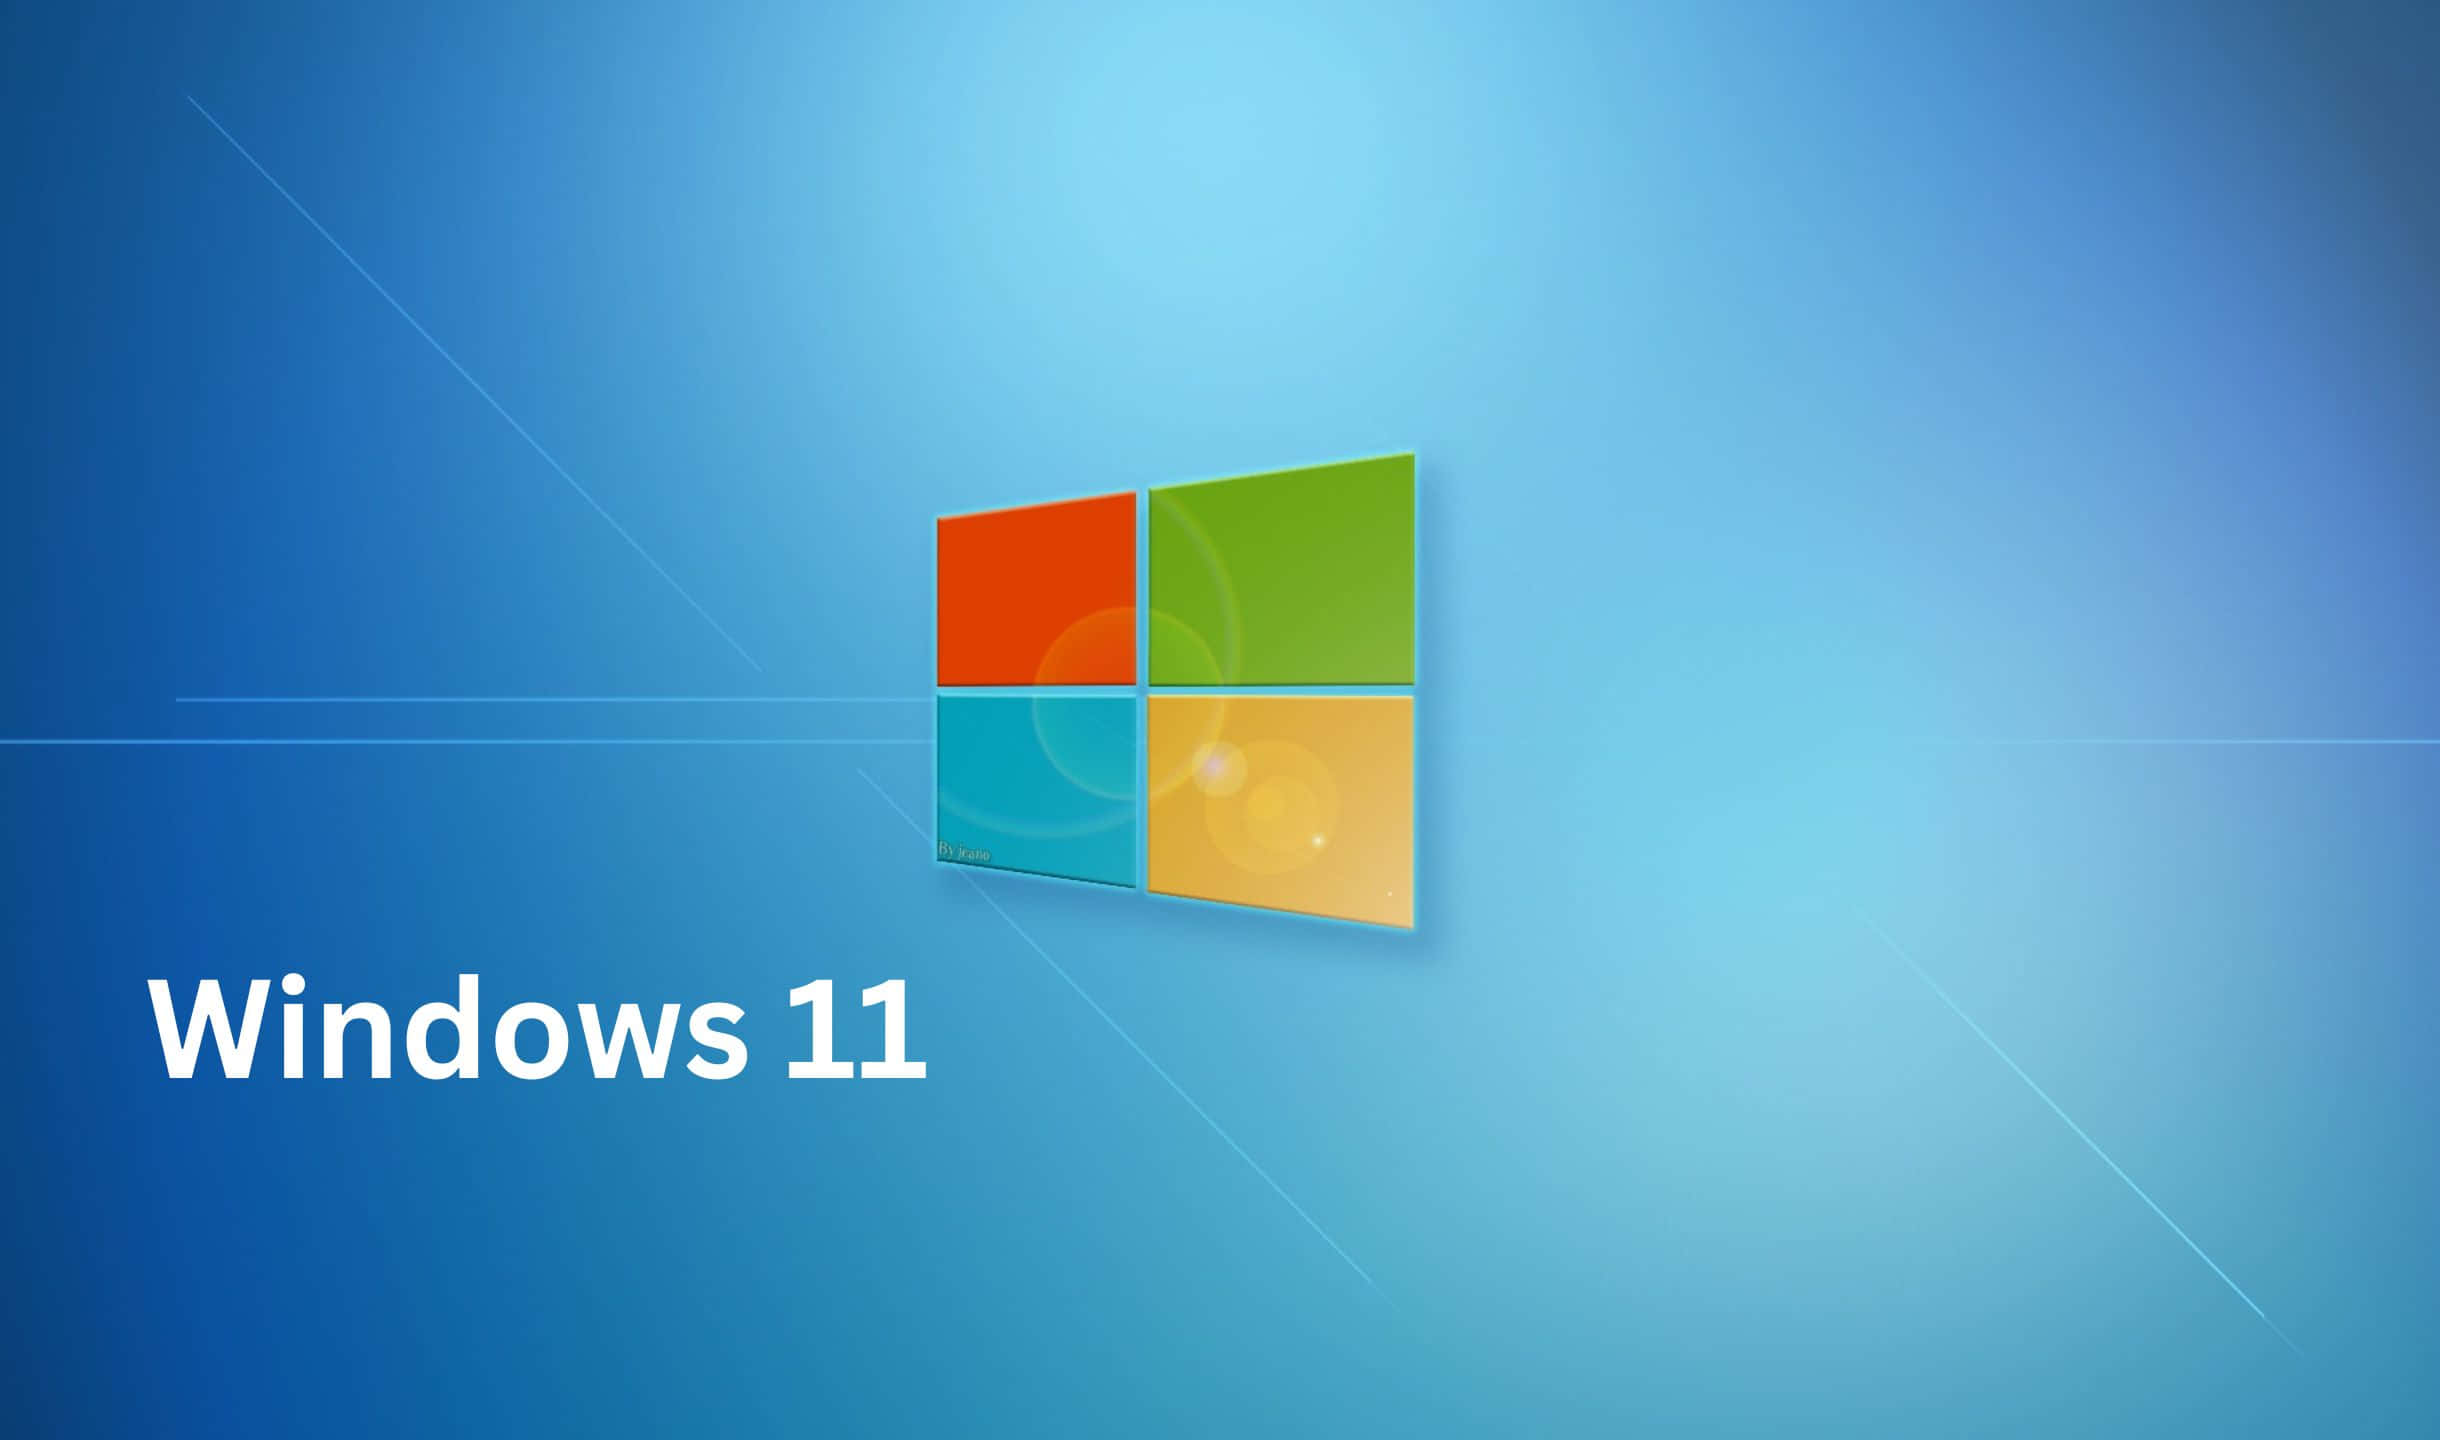 Windows 11 Logo On A Blue Background